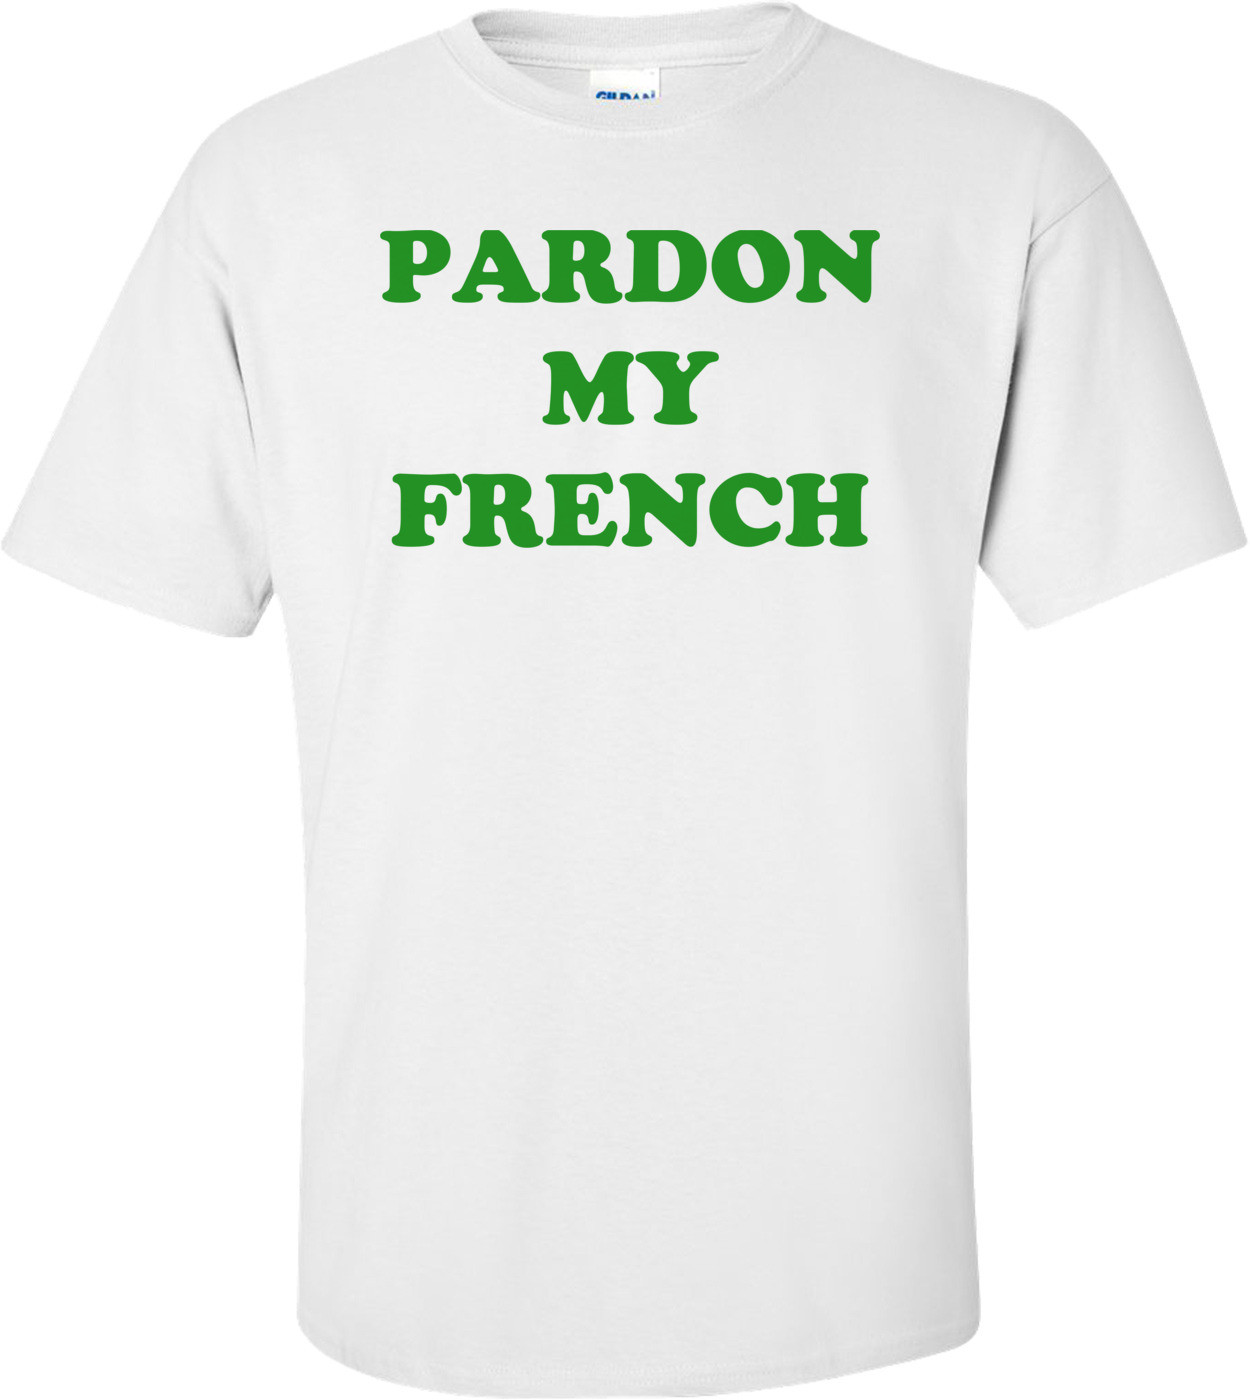 PARDON MY FRENCH Shirt